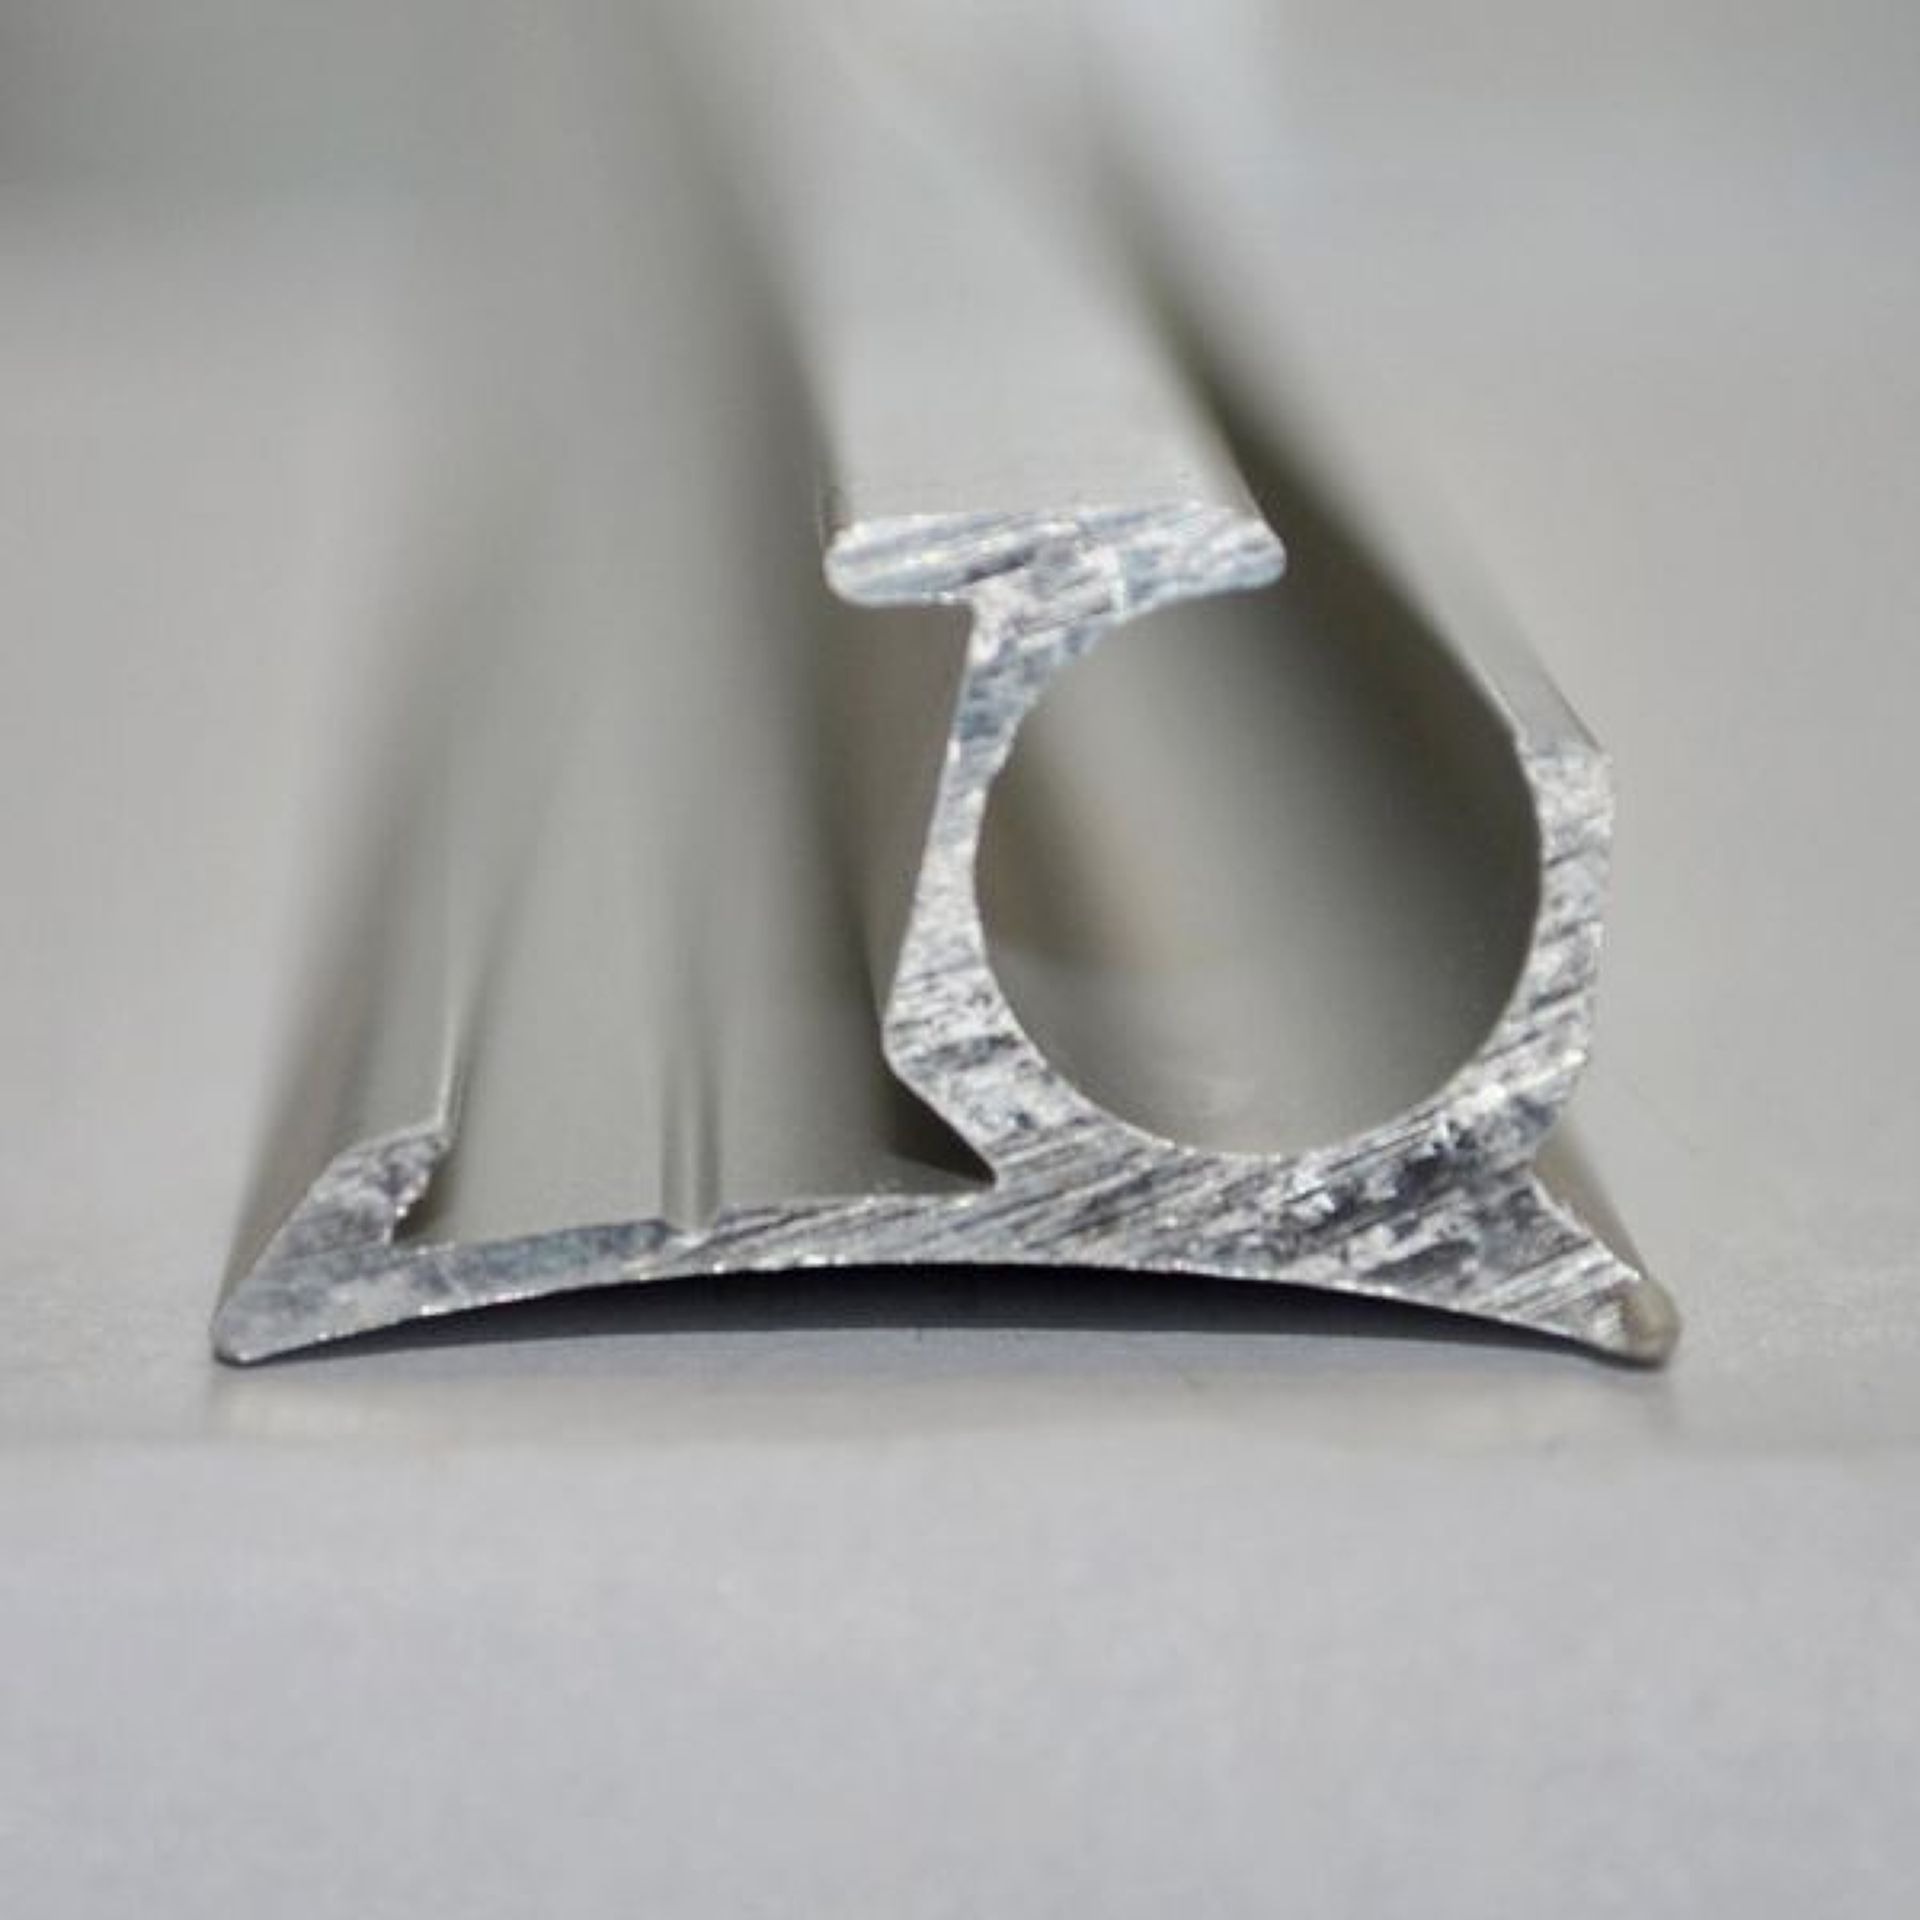 Krycí Alu lišta přímá 25 mm široká, stříbrná eloxovaná